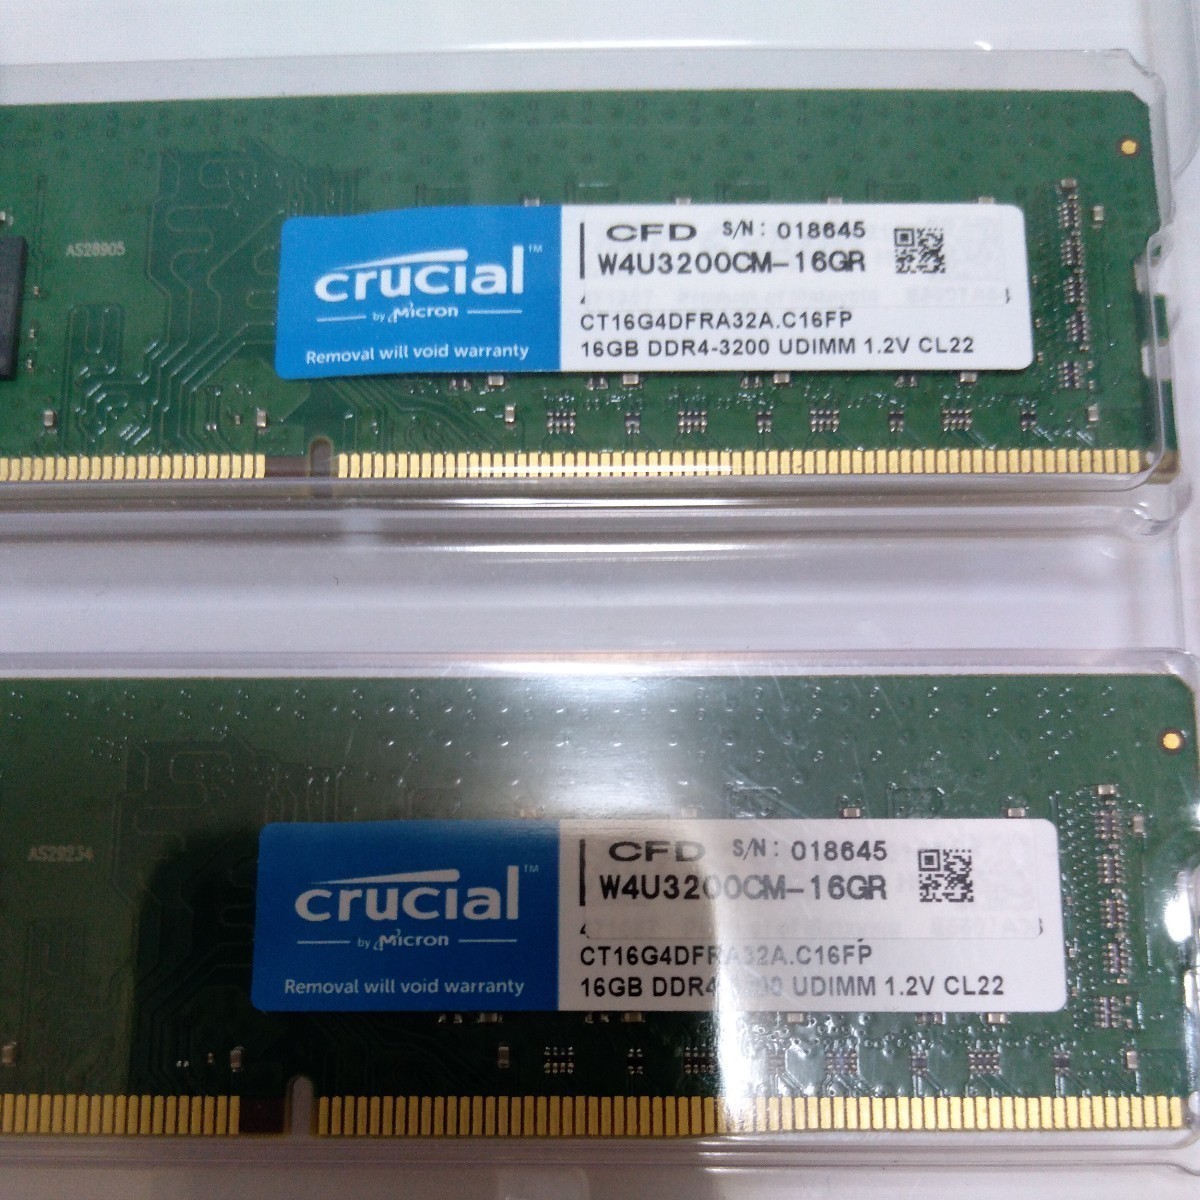 DDR4 32GB CFD W4U3200CM-16GR 16GB×2 листов итого 32GB crucial w4u3200cm crucial CT2K16G4DFRA32A настольный PC память Crew автомобиль ru